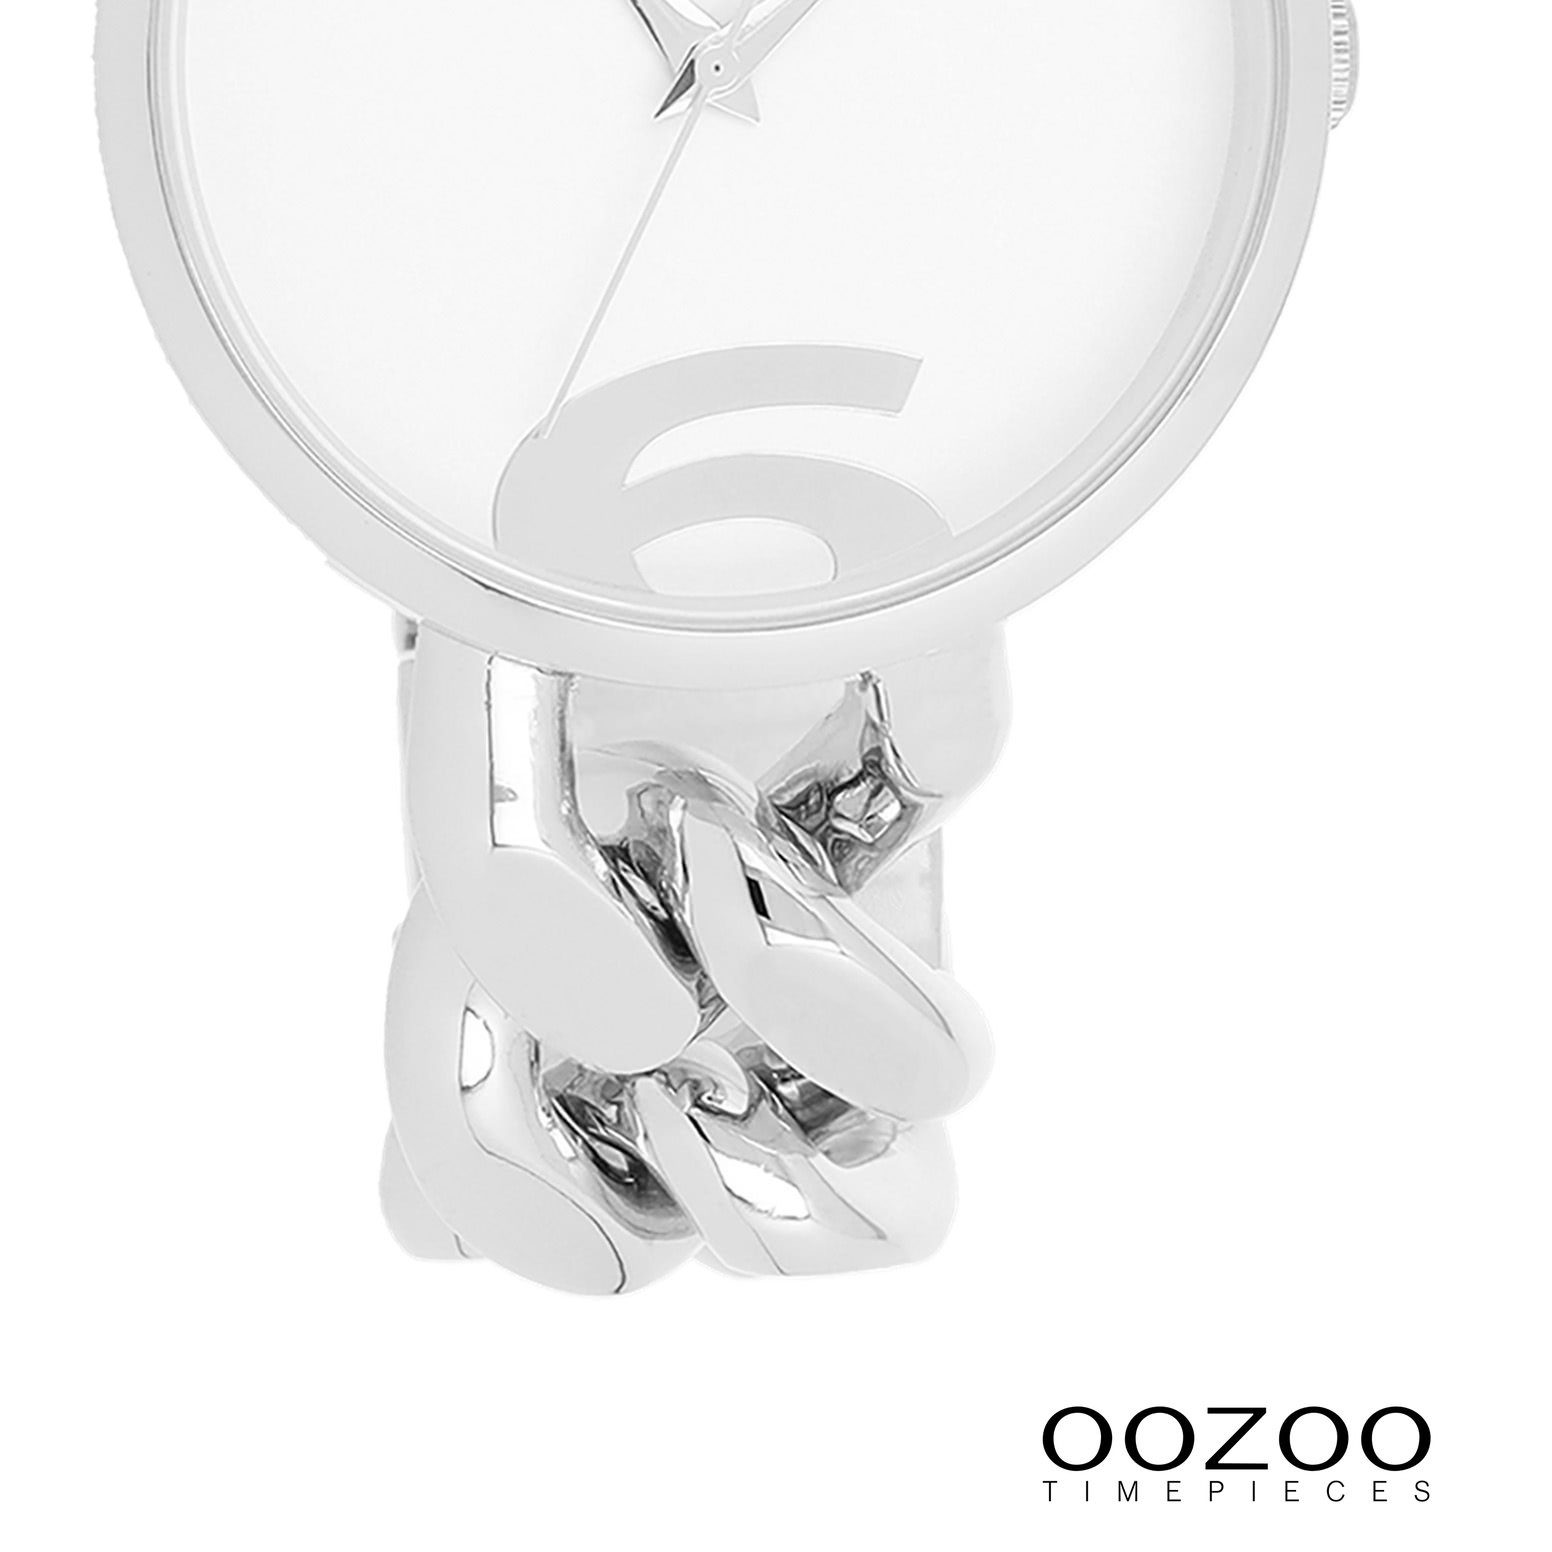 Oozoo Timepieces Metallarmband, Quarzuhr Analog, Fashion-Style rund, OOZOO Damenuhr Armbanduhr (ca. 40mm) groß Damen